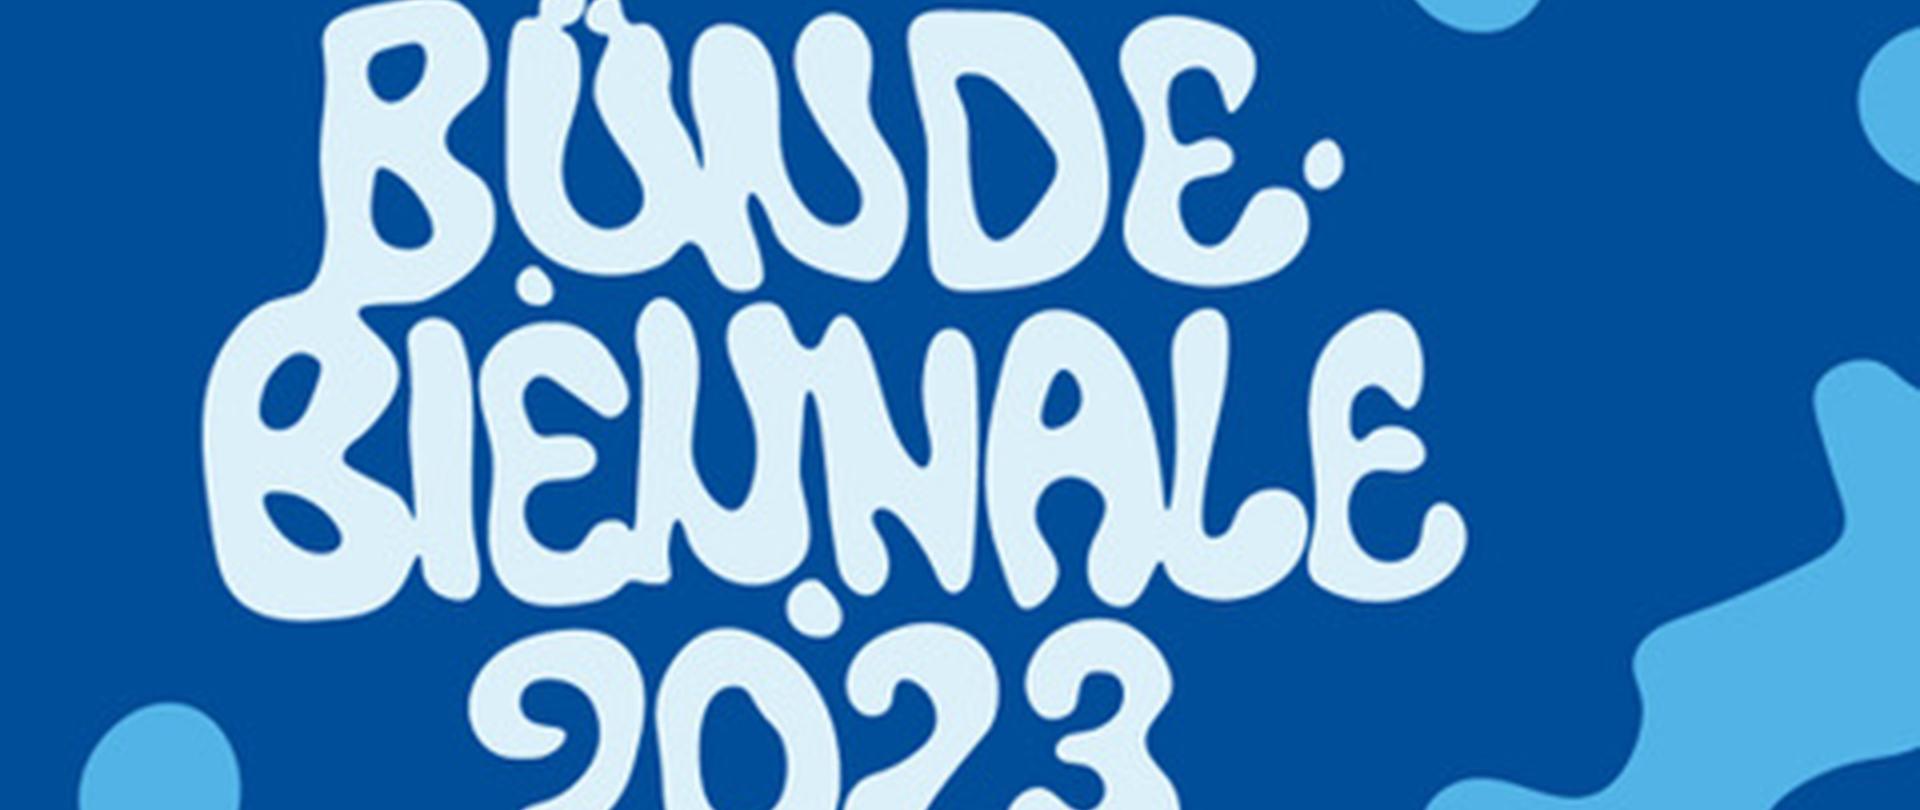 Plakat, na niebieskim tle napis: Bünde Biennale 2023